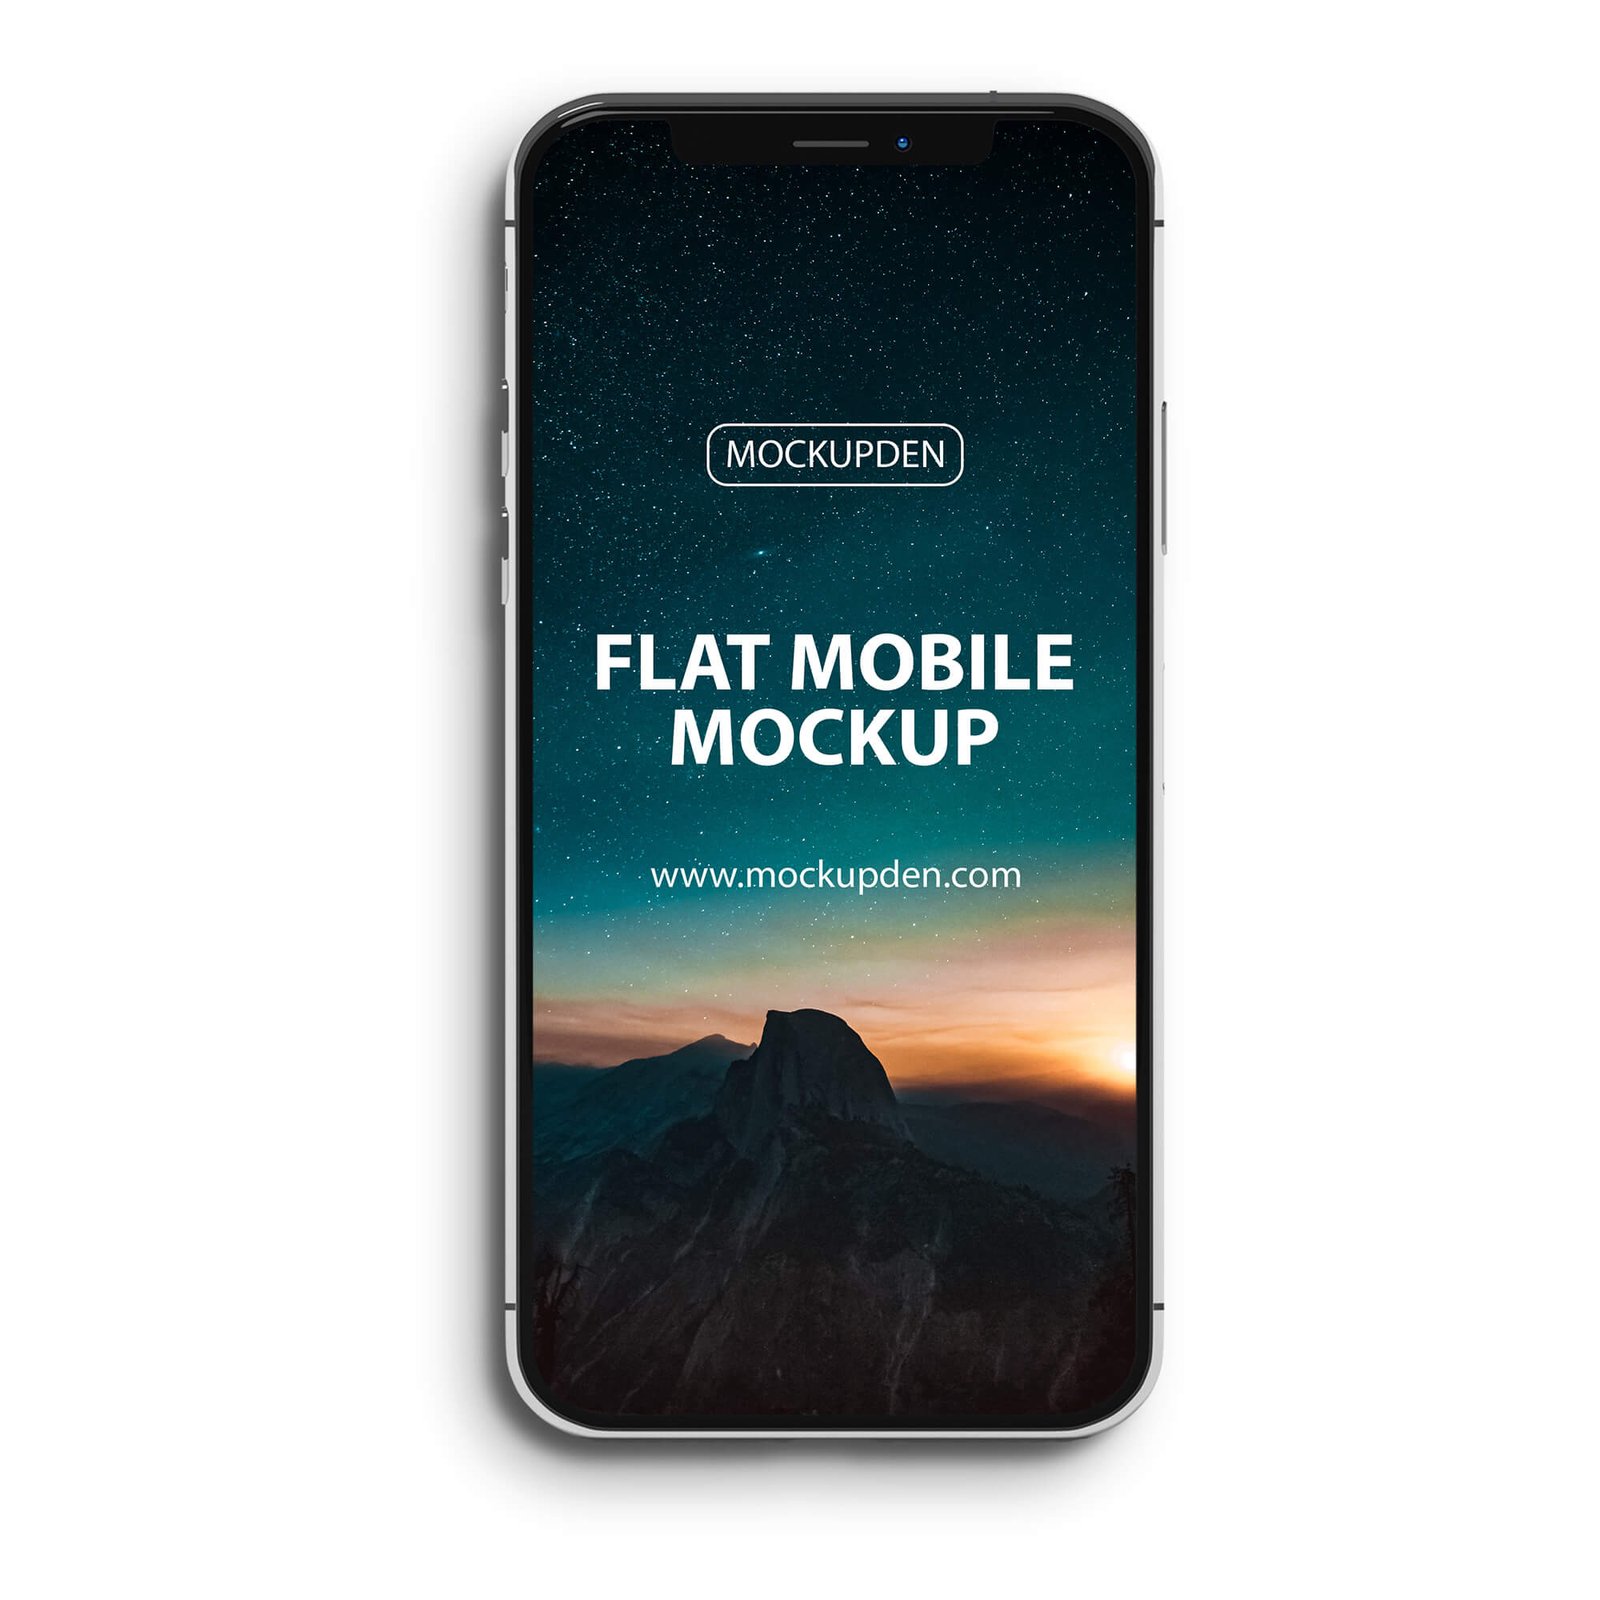 Design Free Flat Mobile Mockup PSD Template